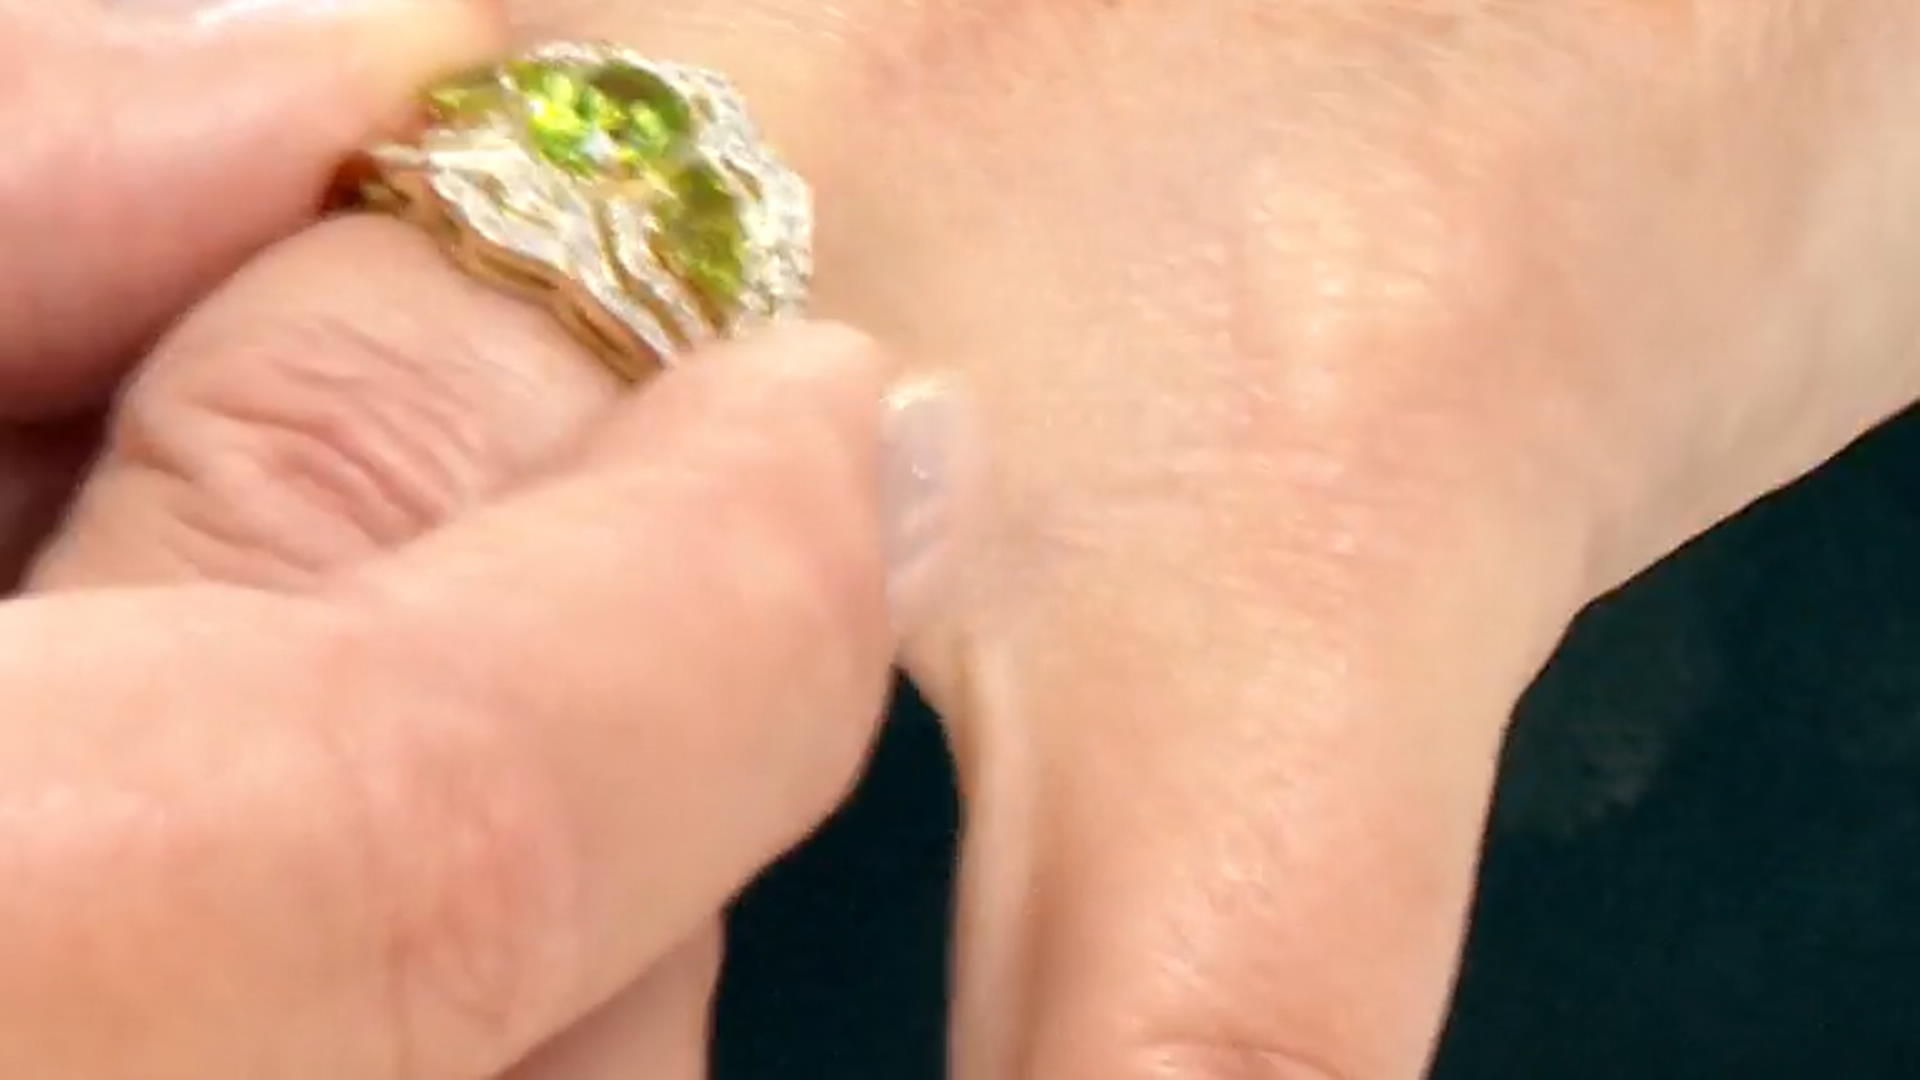 Green Peridot And White Diamond 14k Yellow Gold 3-Stone Ring 2.28ctw Video Thumbnail